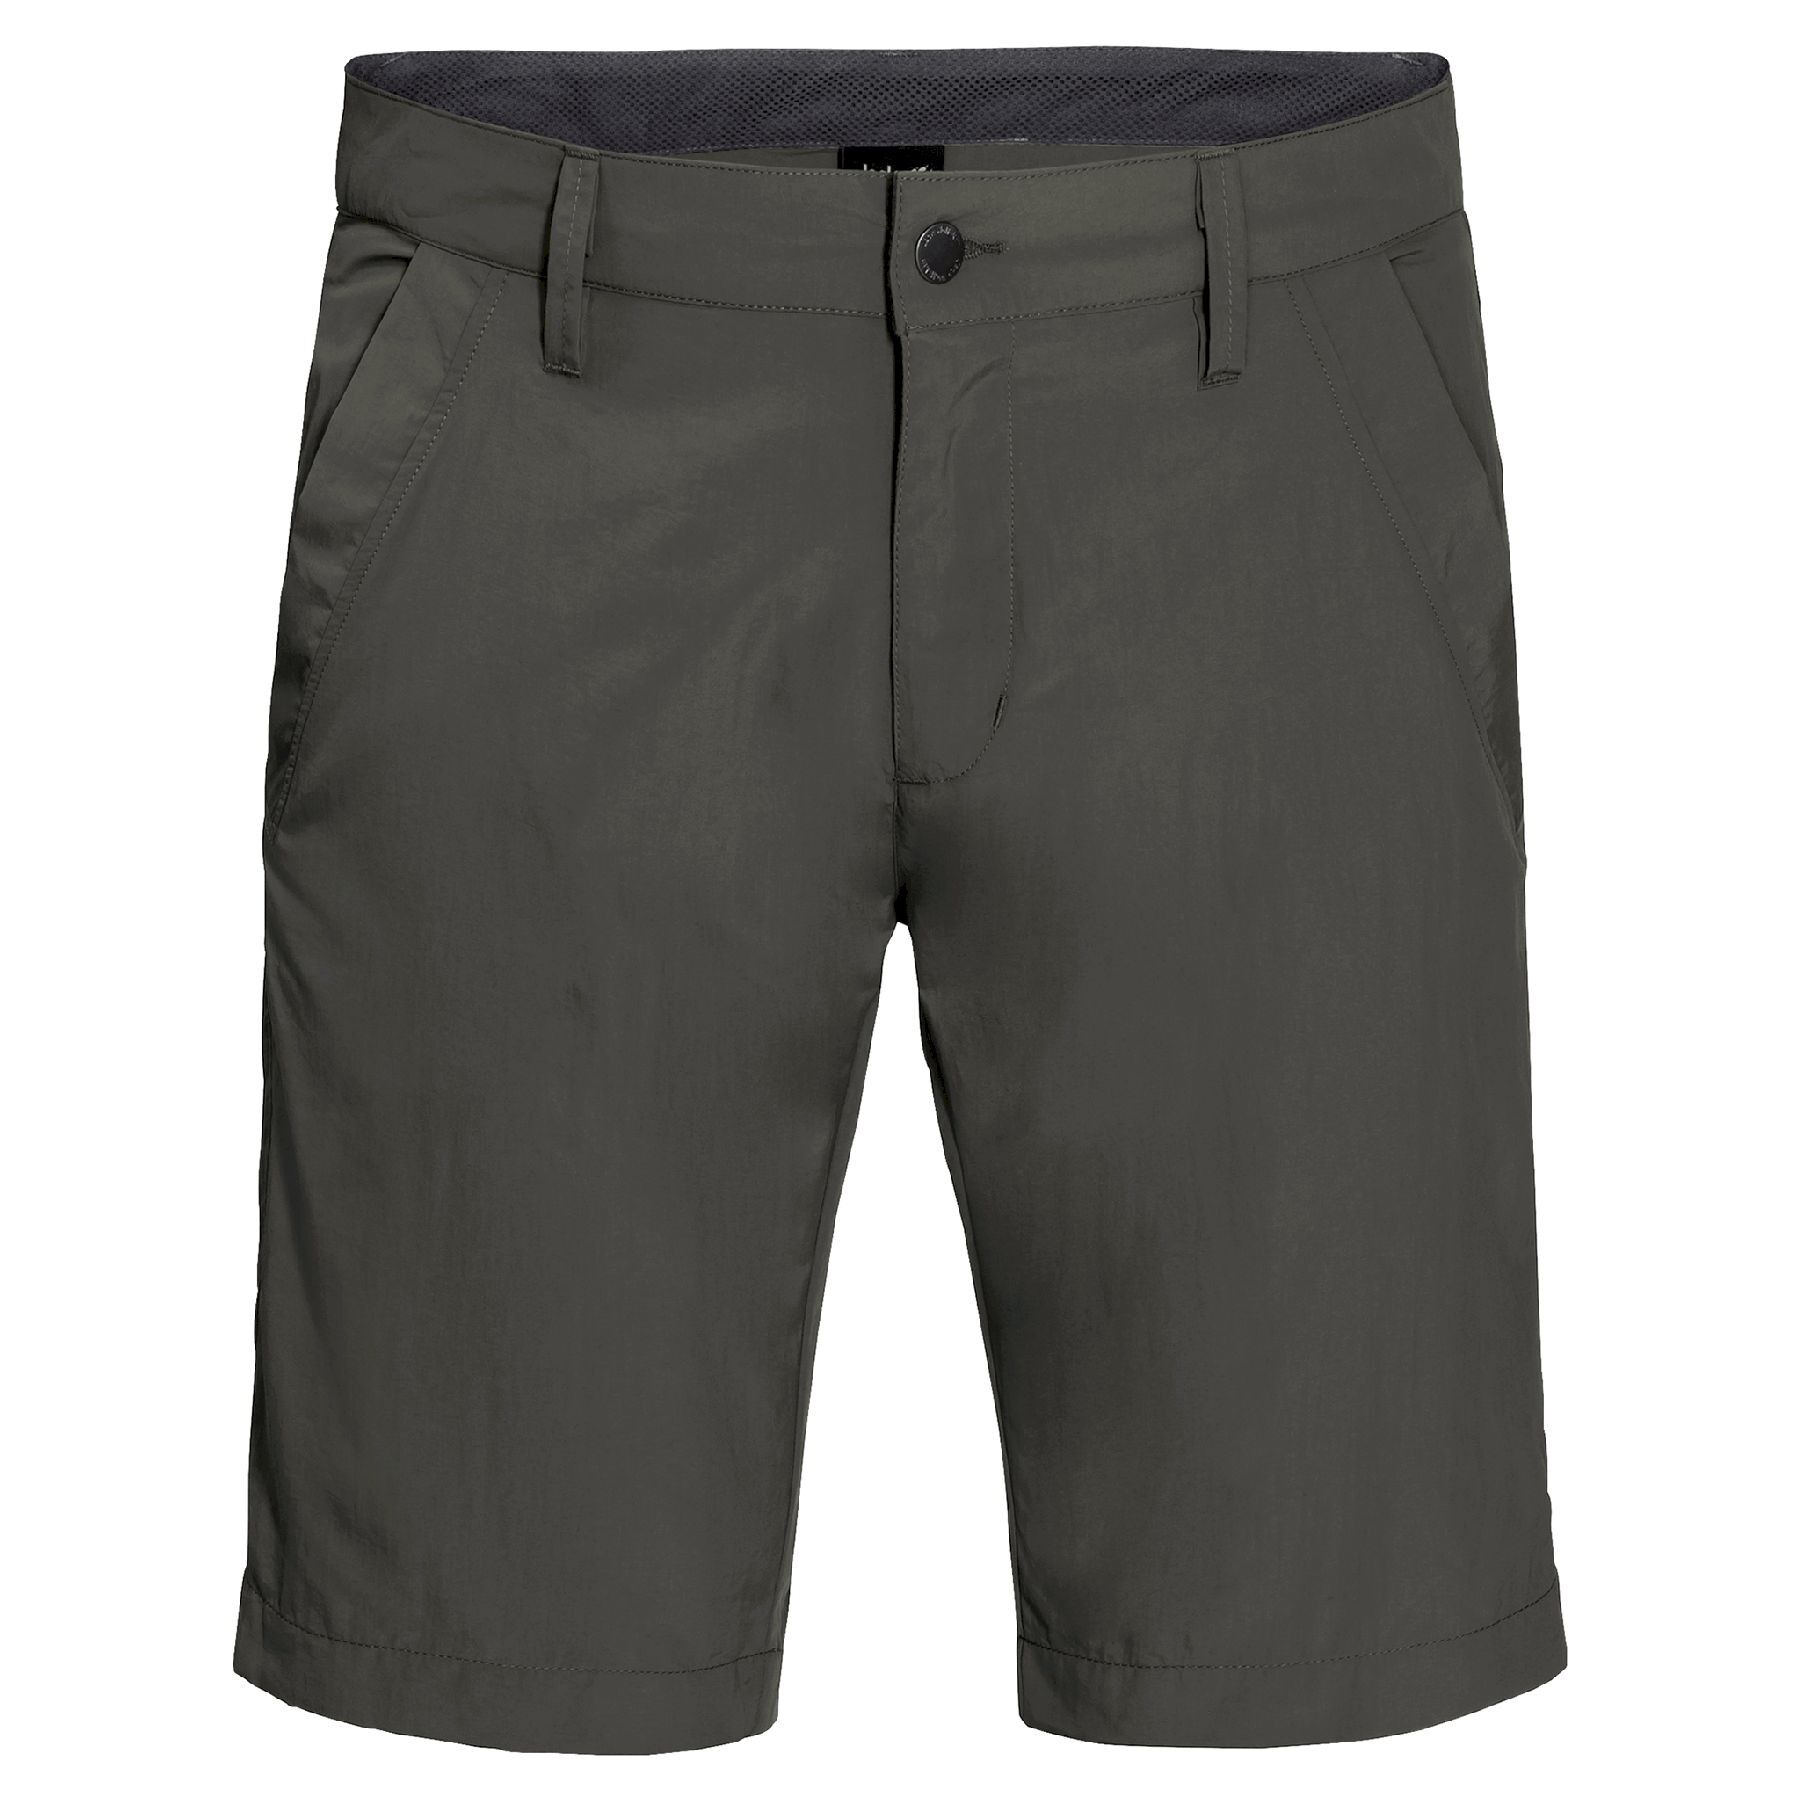 Jack Wolfskin Desert Valley Shorts - Shorts - Men's